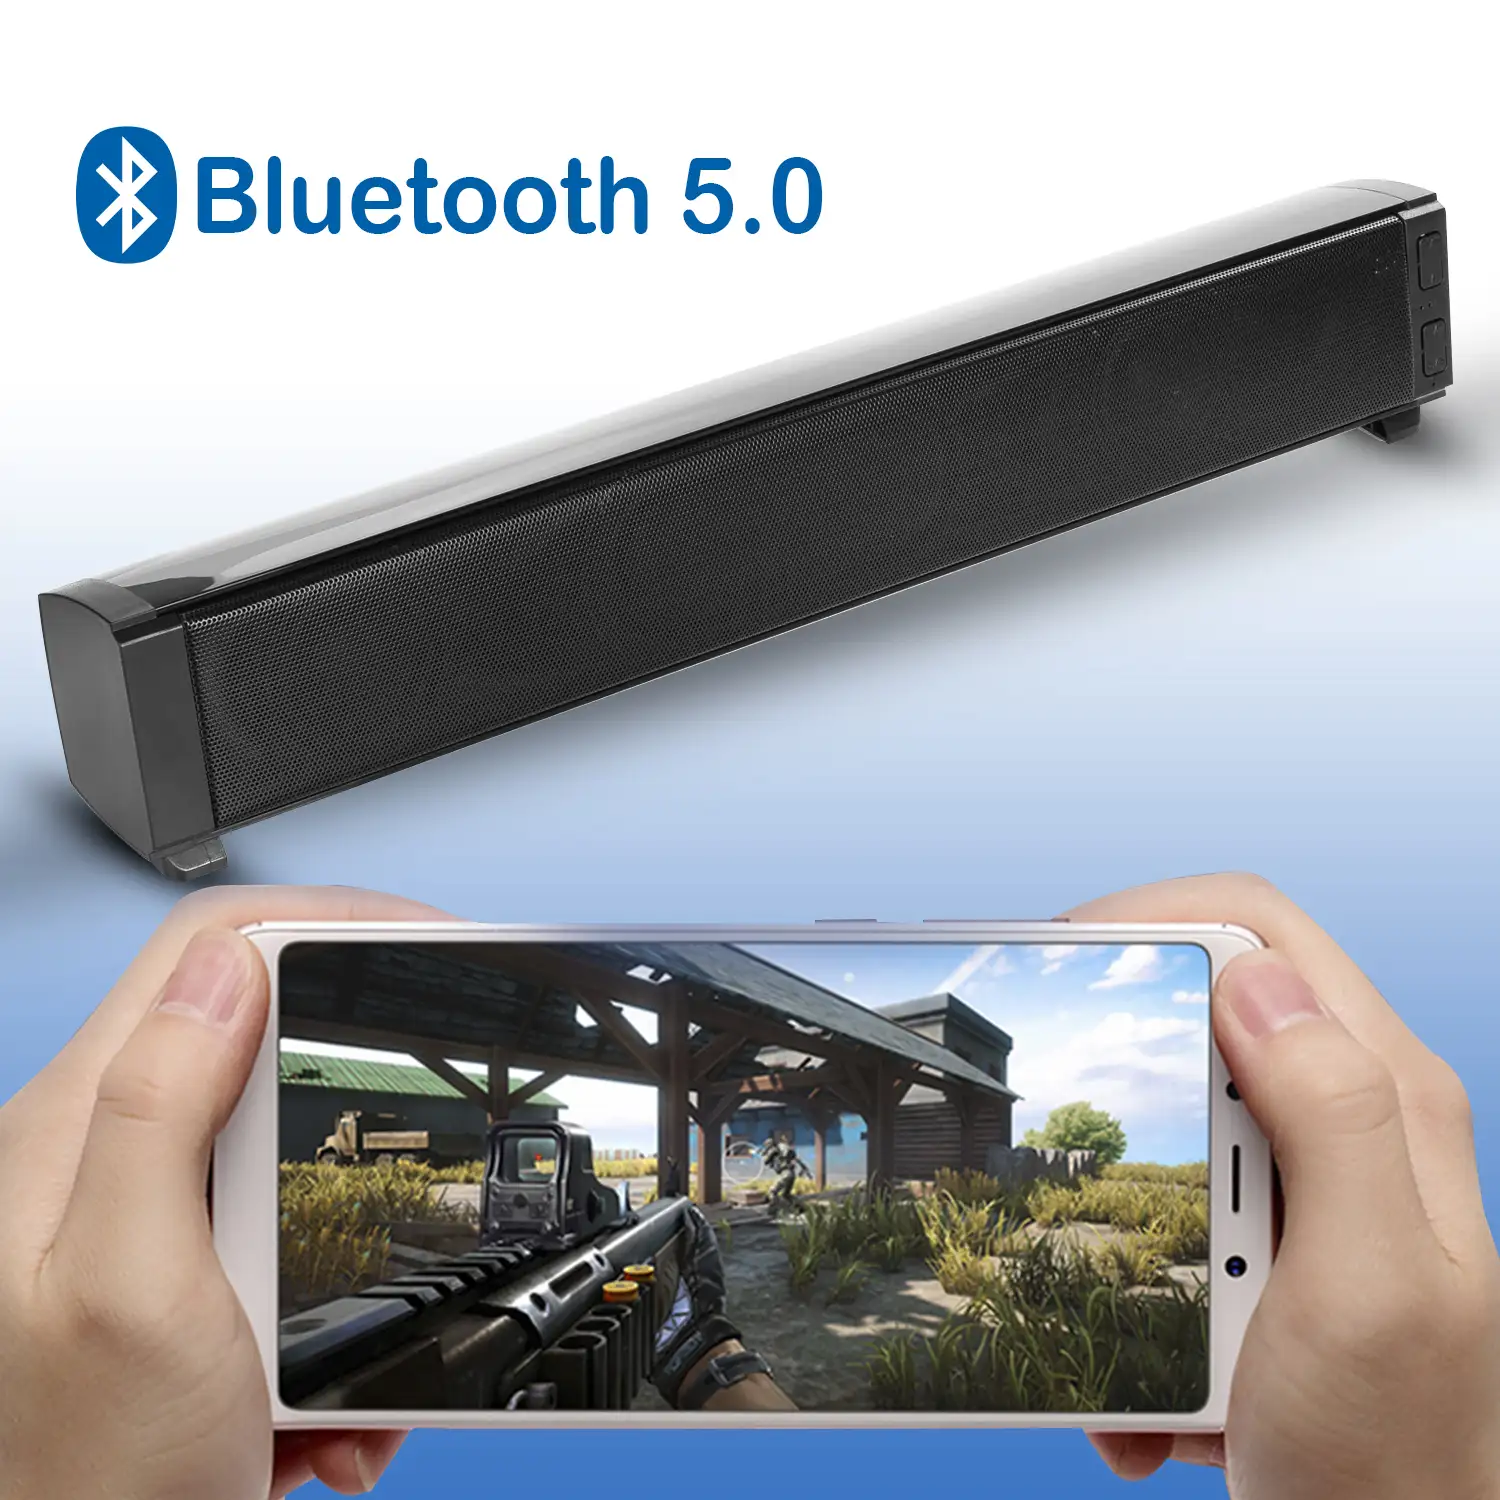 Barra de sonido estéreo Bluetooth 5.0 con mando a distancia. Batería de 2000mAh.